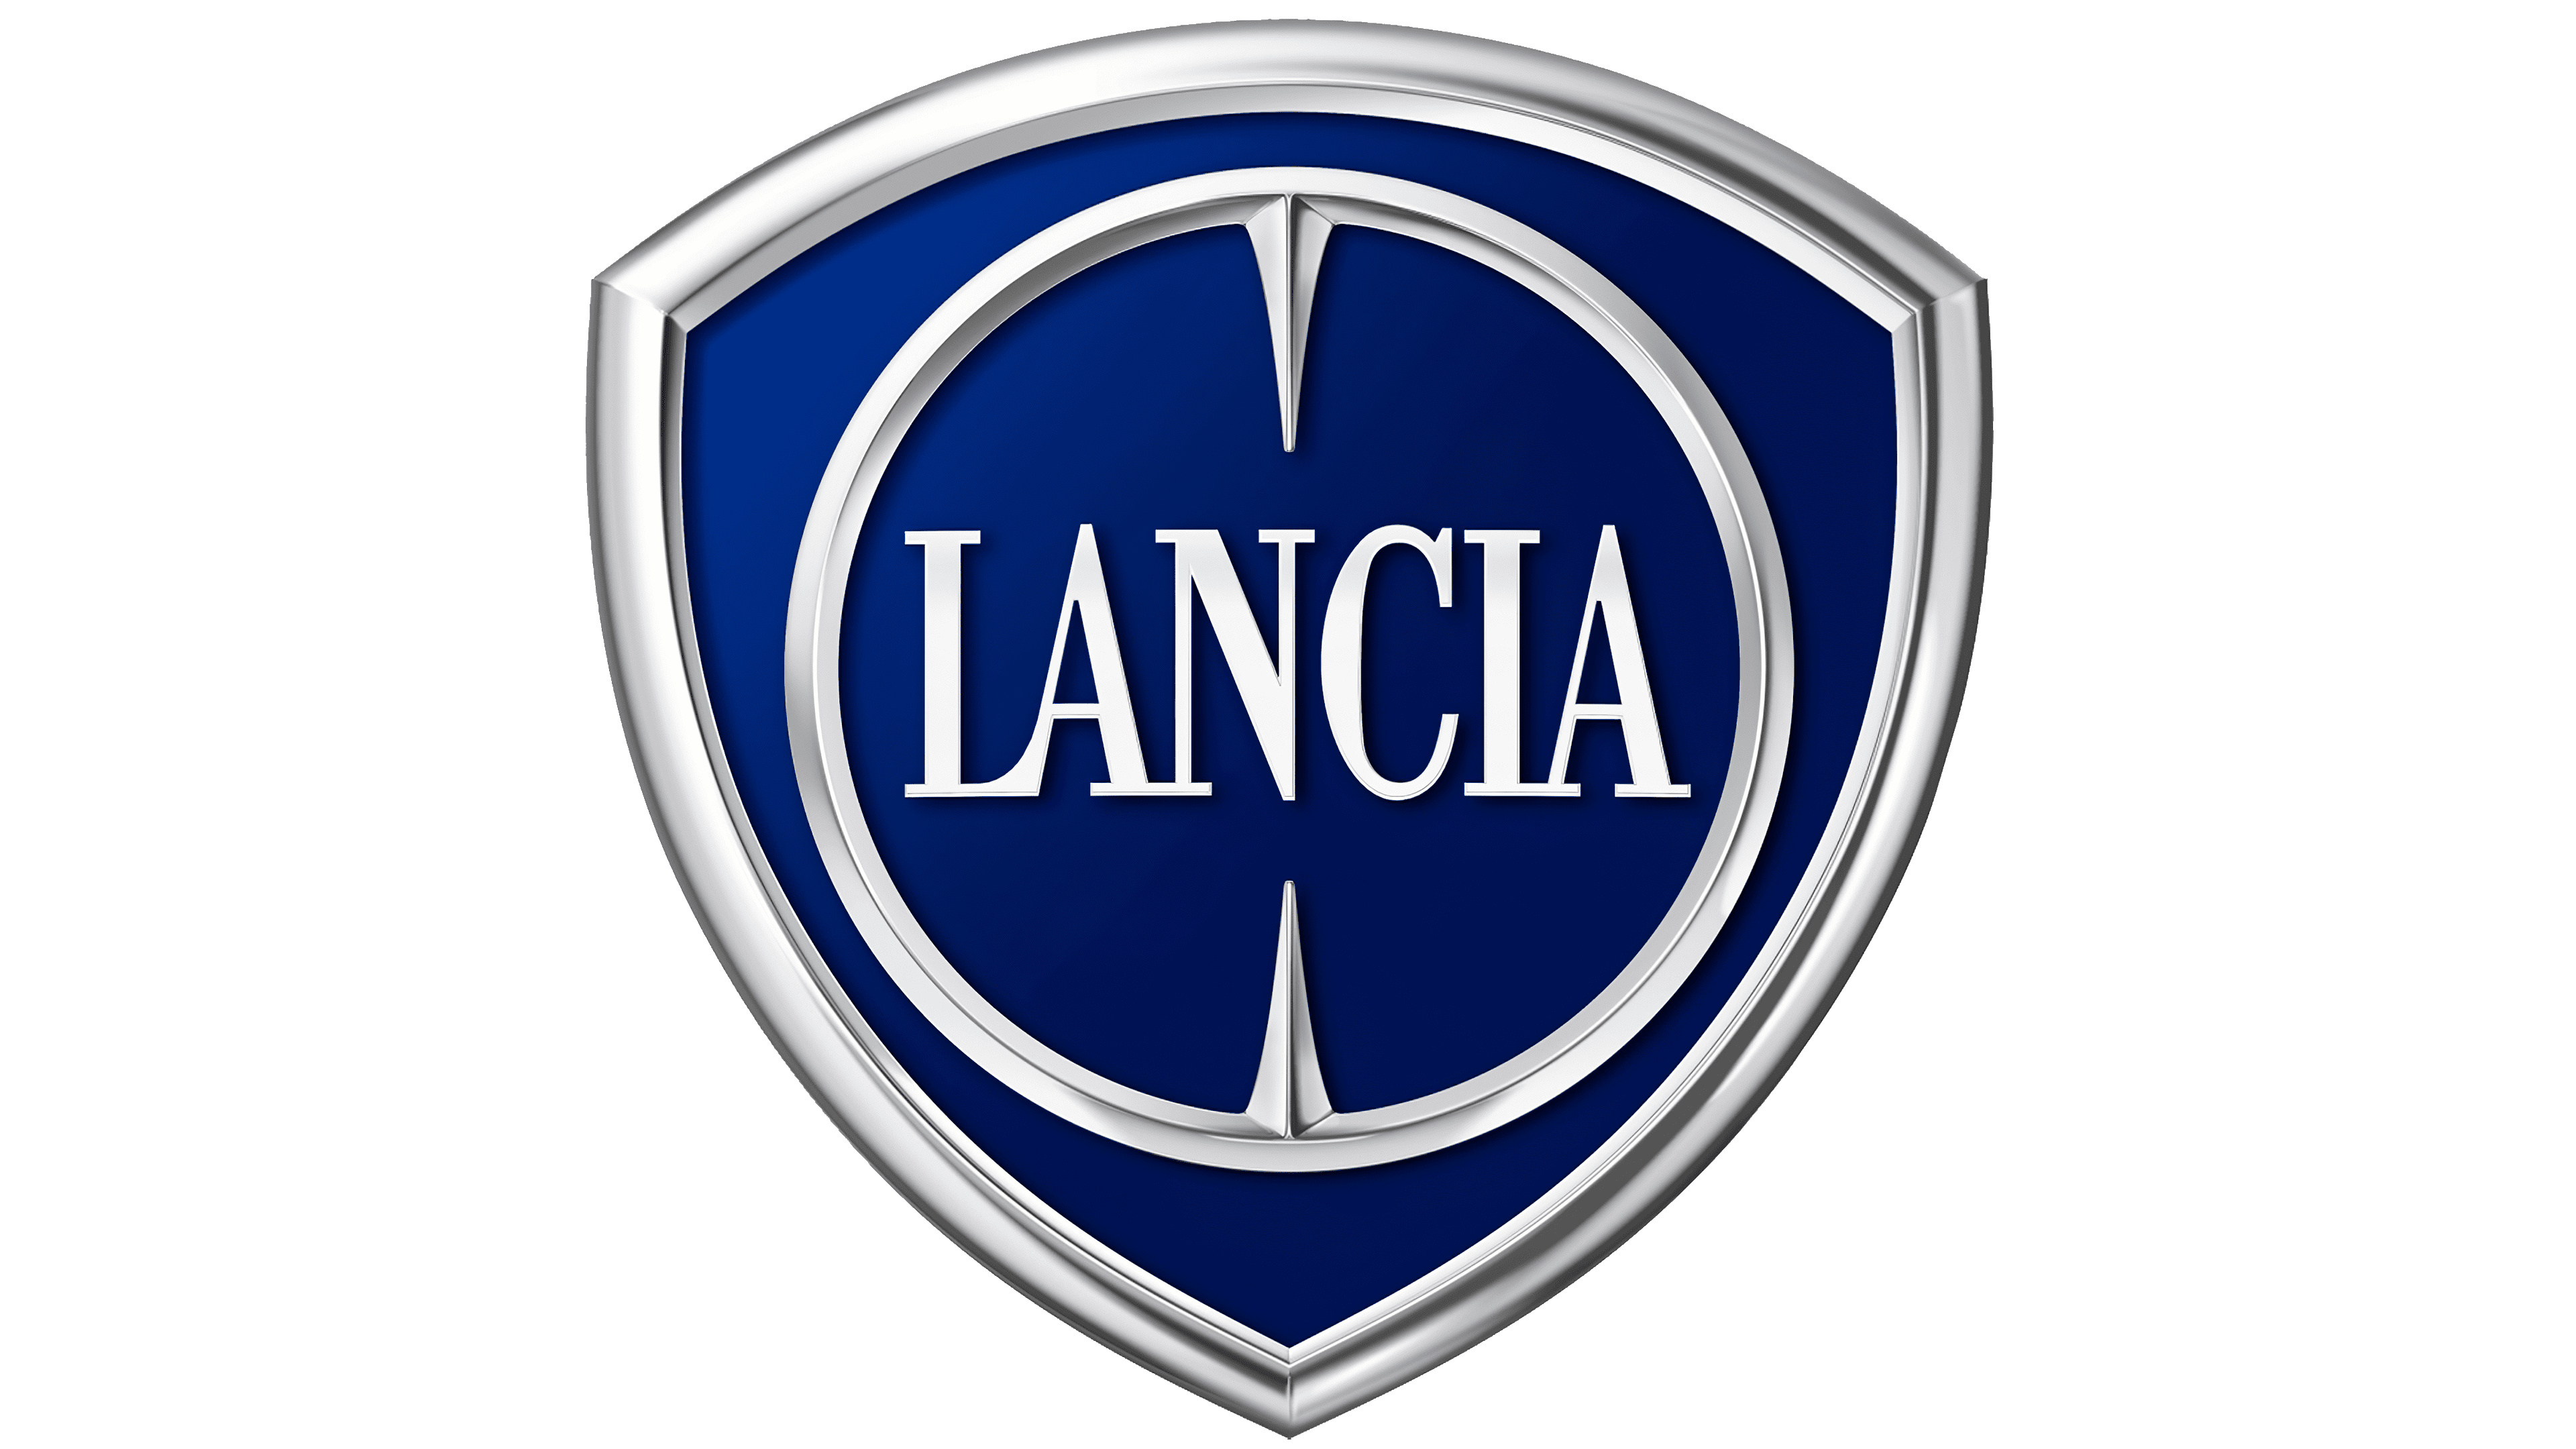 Lancia logo, Emblem symbol, Automotive history, Iconic brand, 3840x2160 4K Desktop